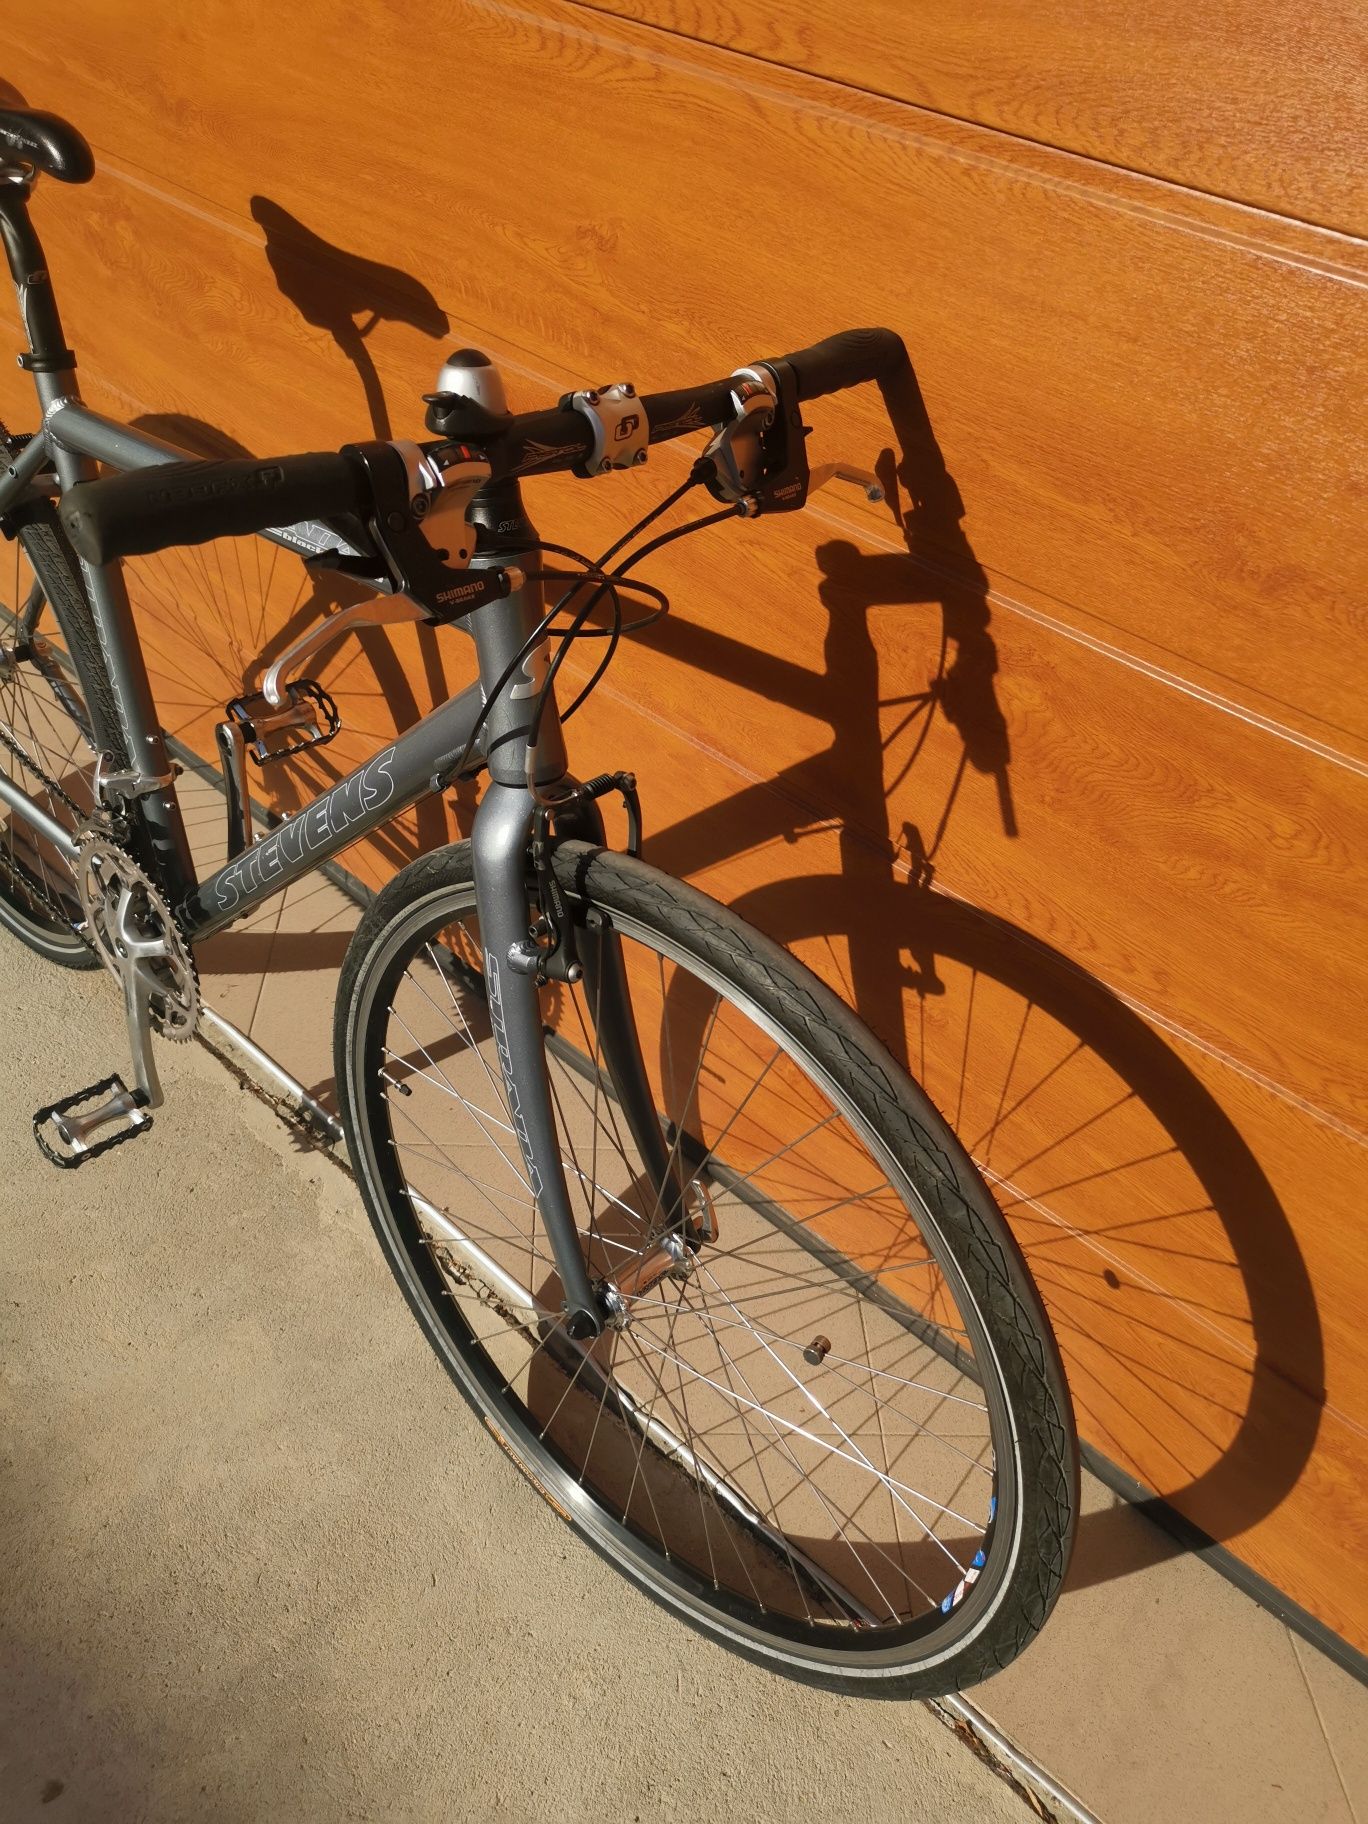 Stеvens Strada x3c велосипед колело